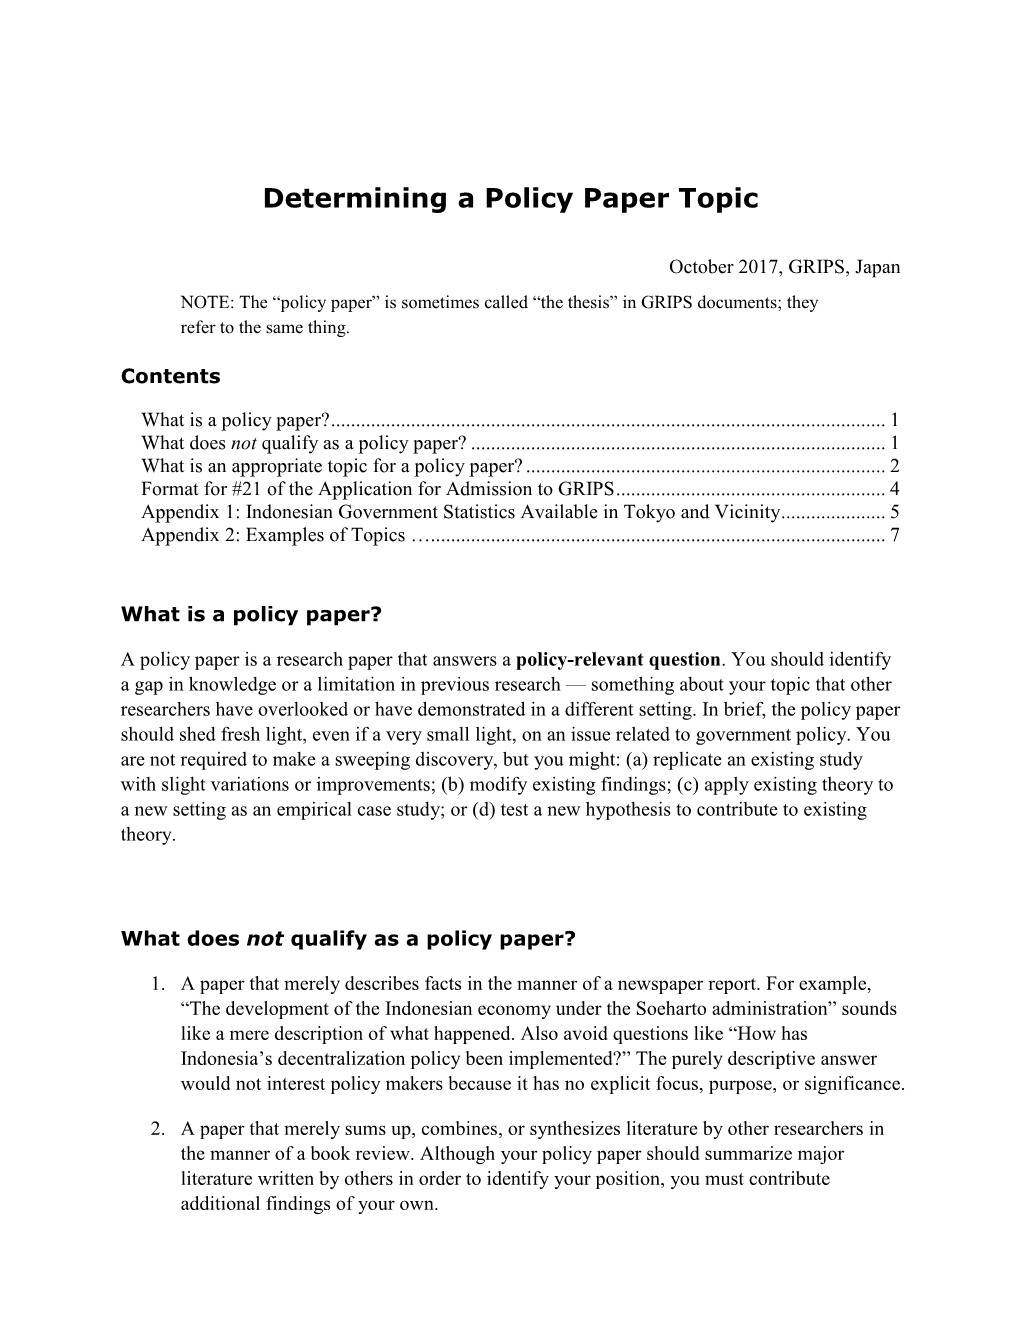 LMP Policy Paper Handbook